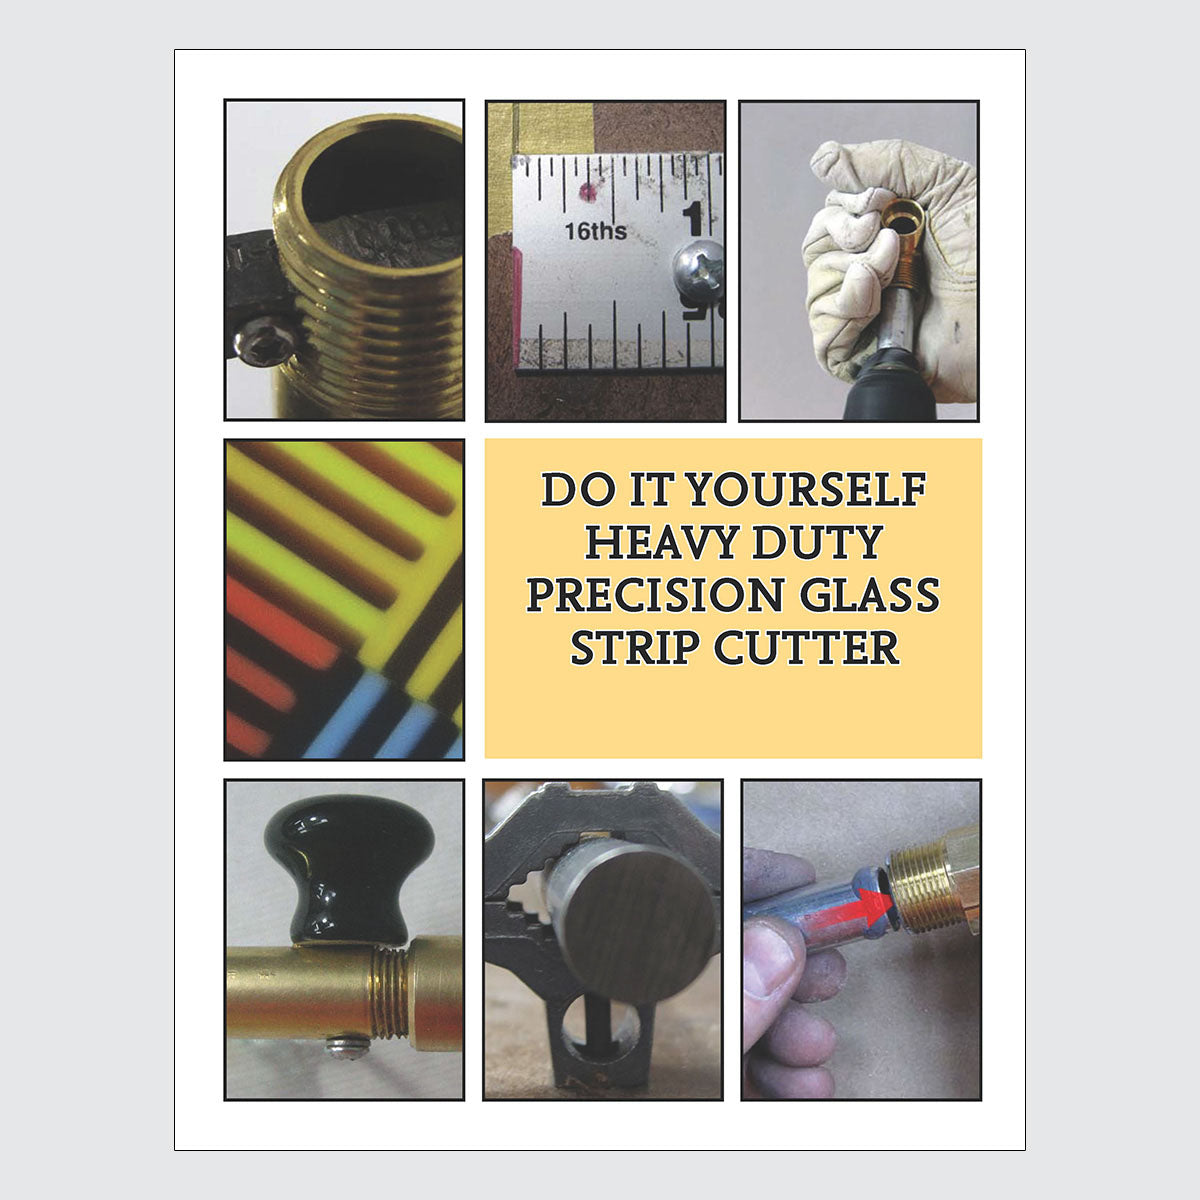 Do It Yourself Heavy Duty Precision Glass Strip Cutter